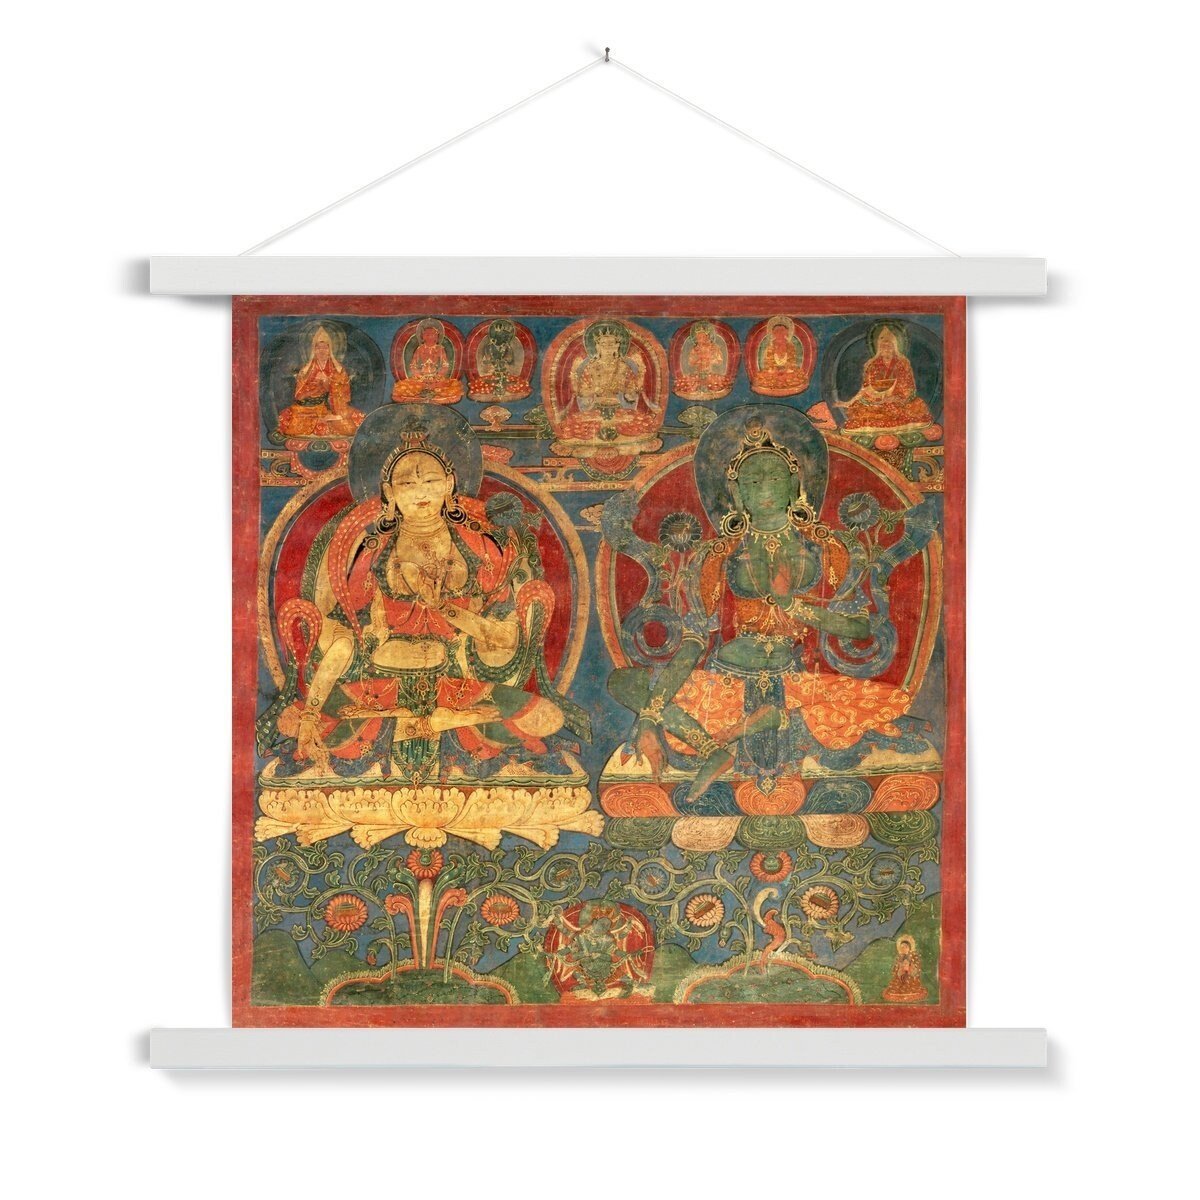 Hangar Thangka Green Tara White Tara Buddhist Protector Meditation Deity Tantra Tantric Antique Vintage Thangka-Style Fine Art Print